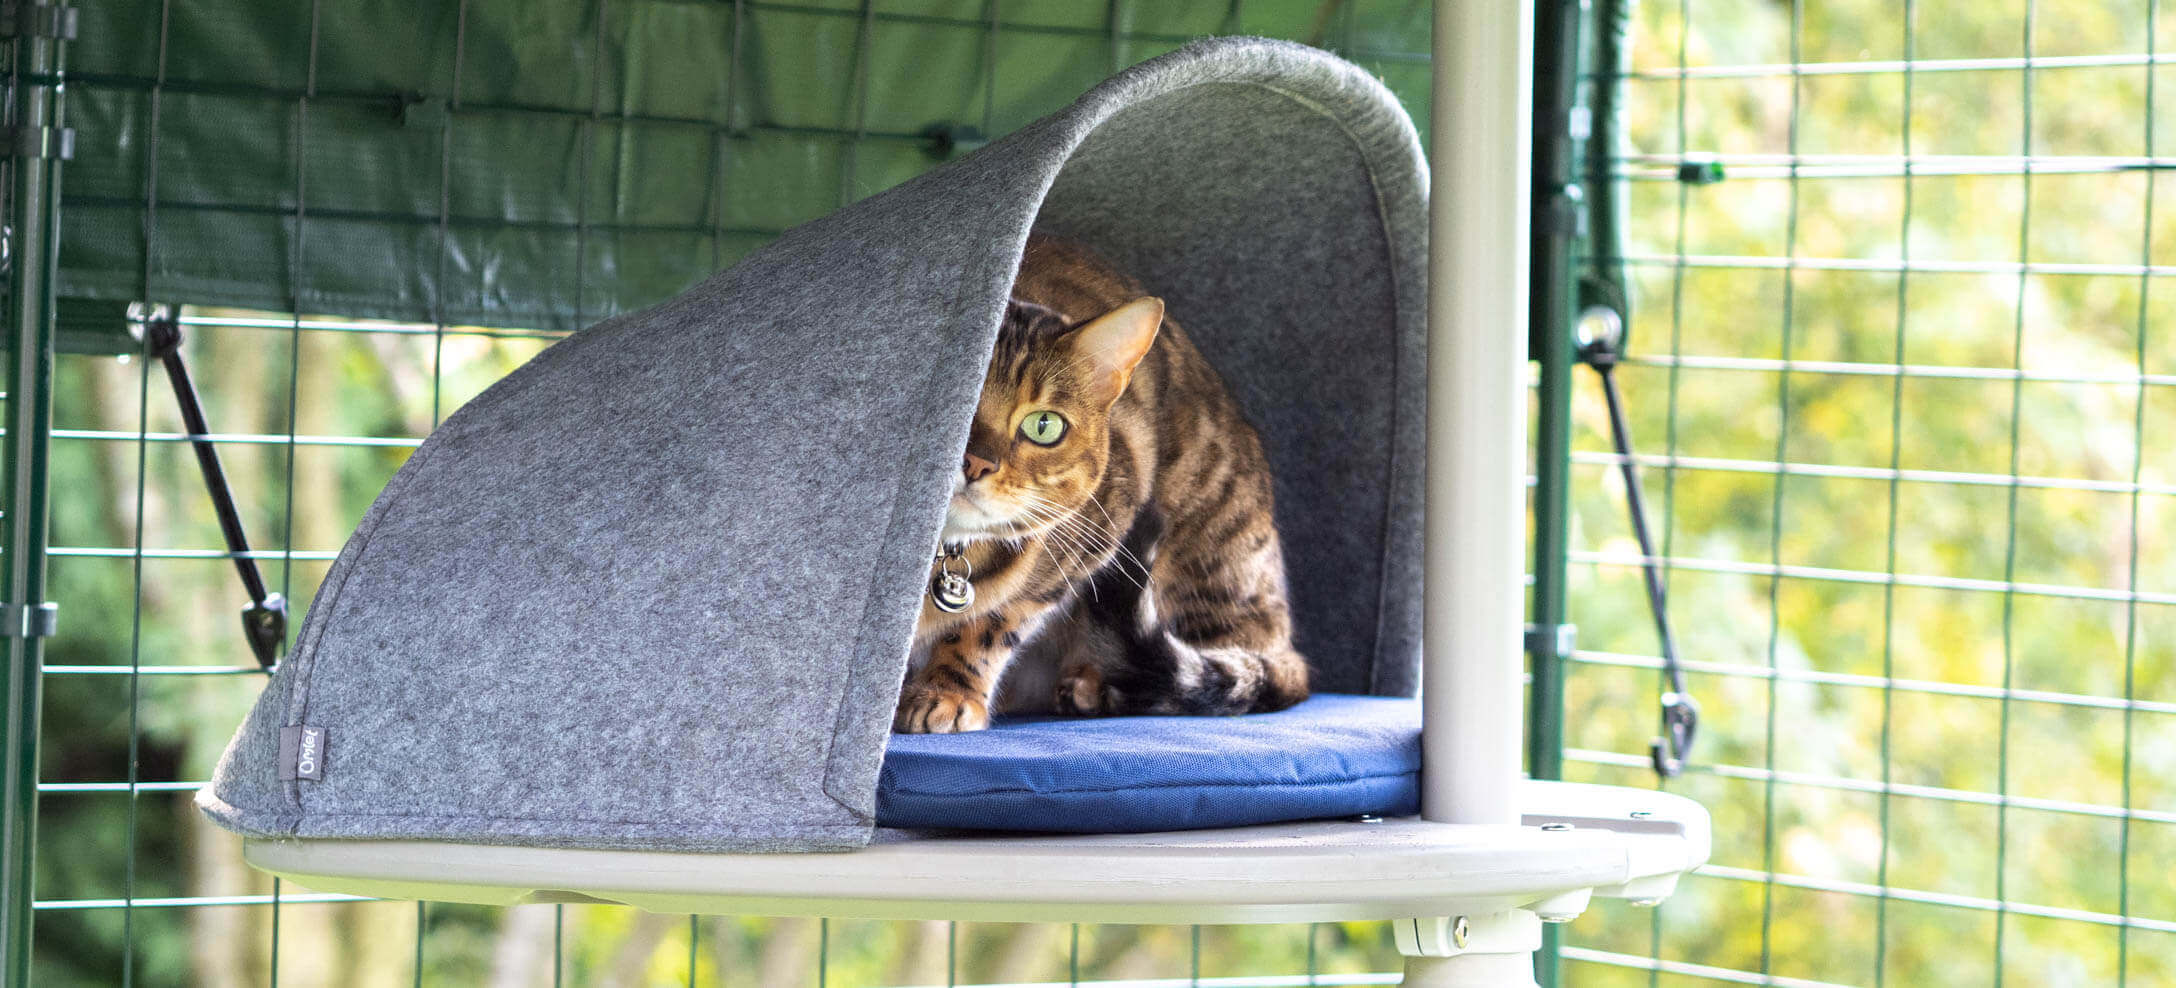 Bengal cat sat in outdoor cat den on blue cushion